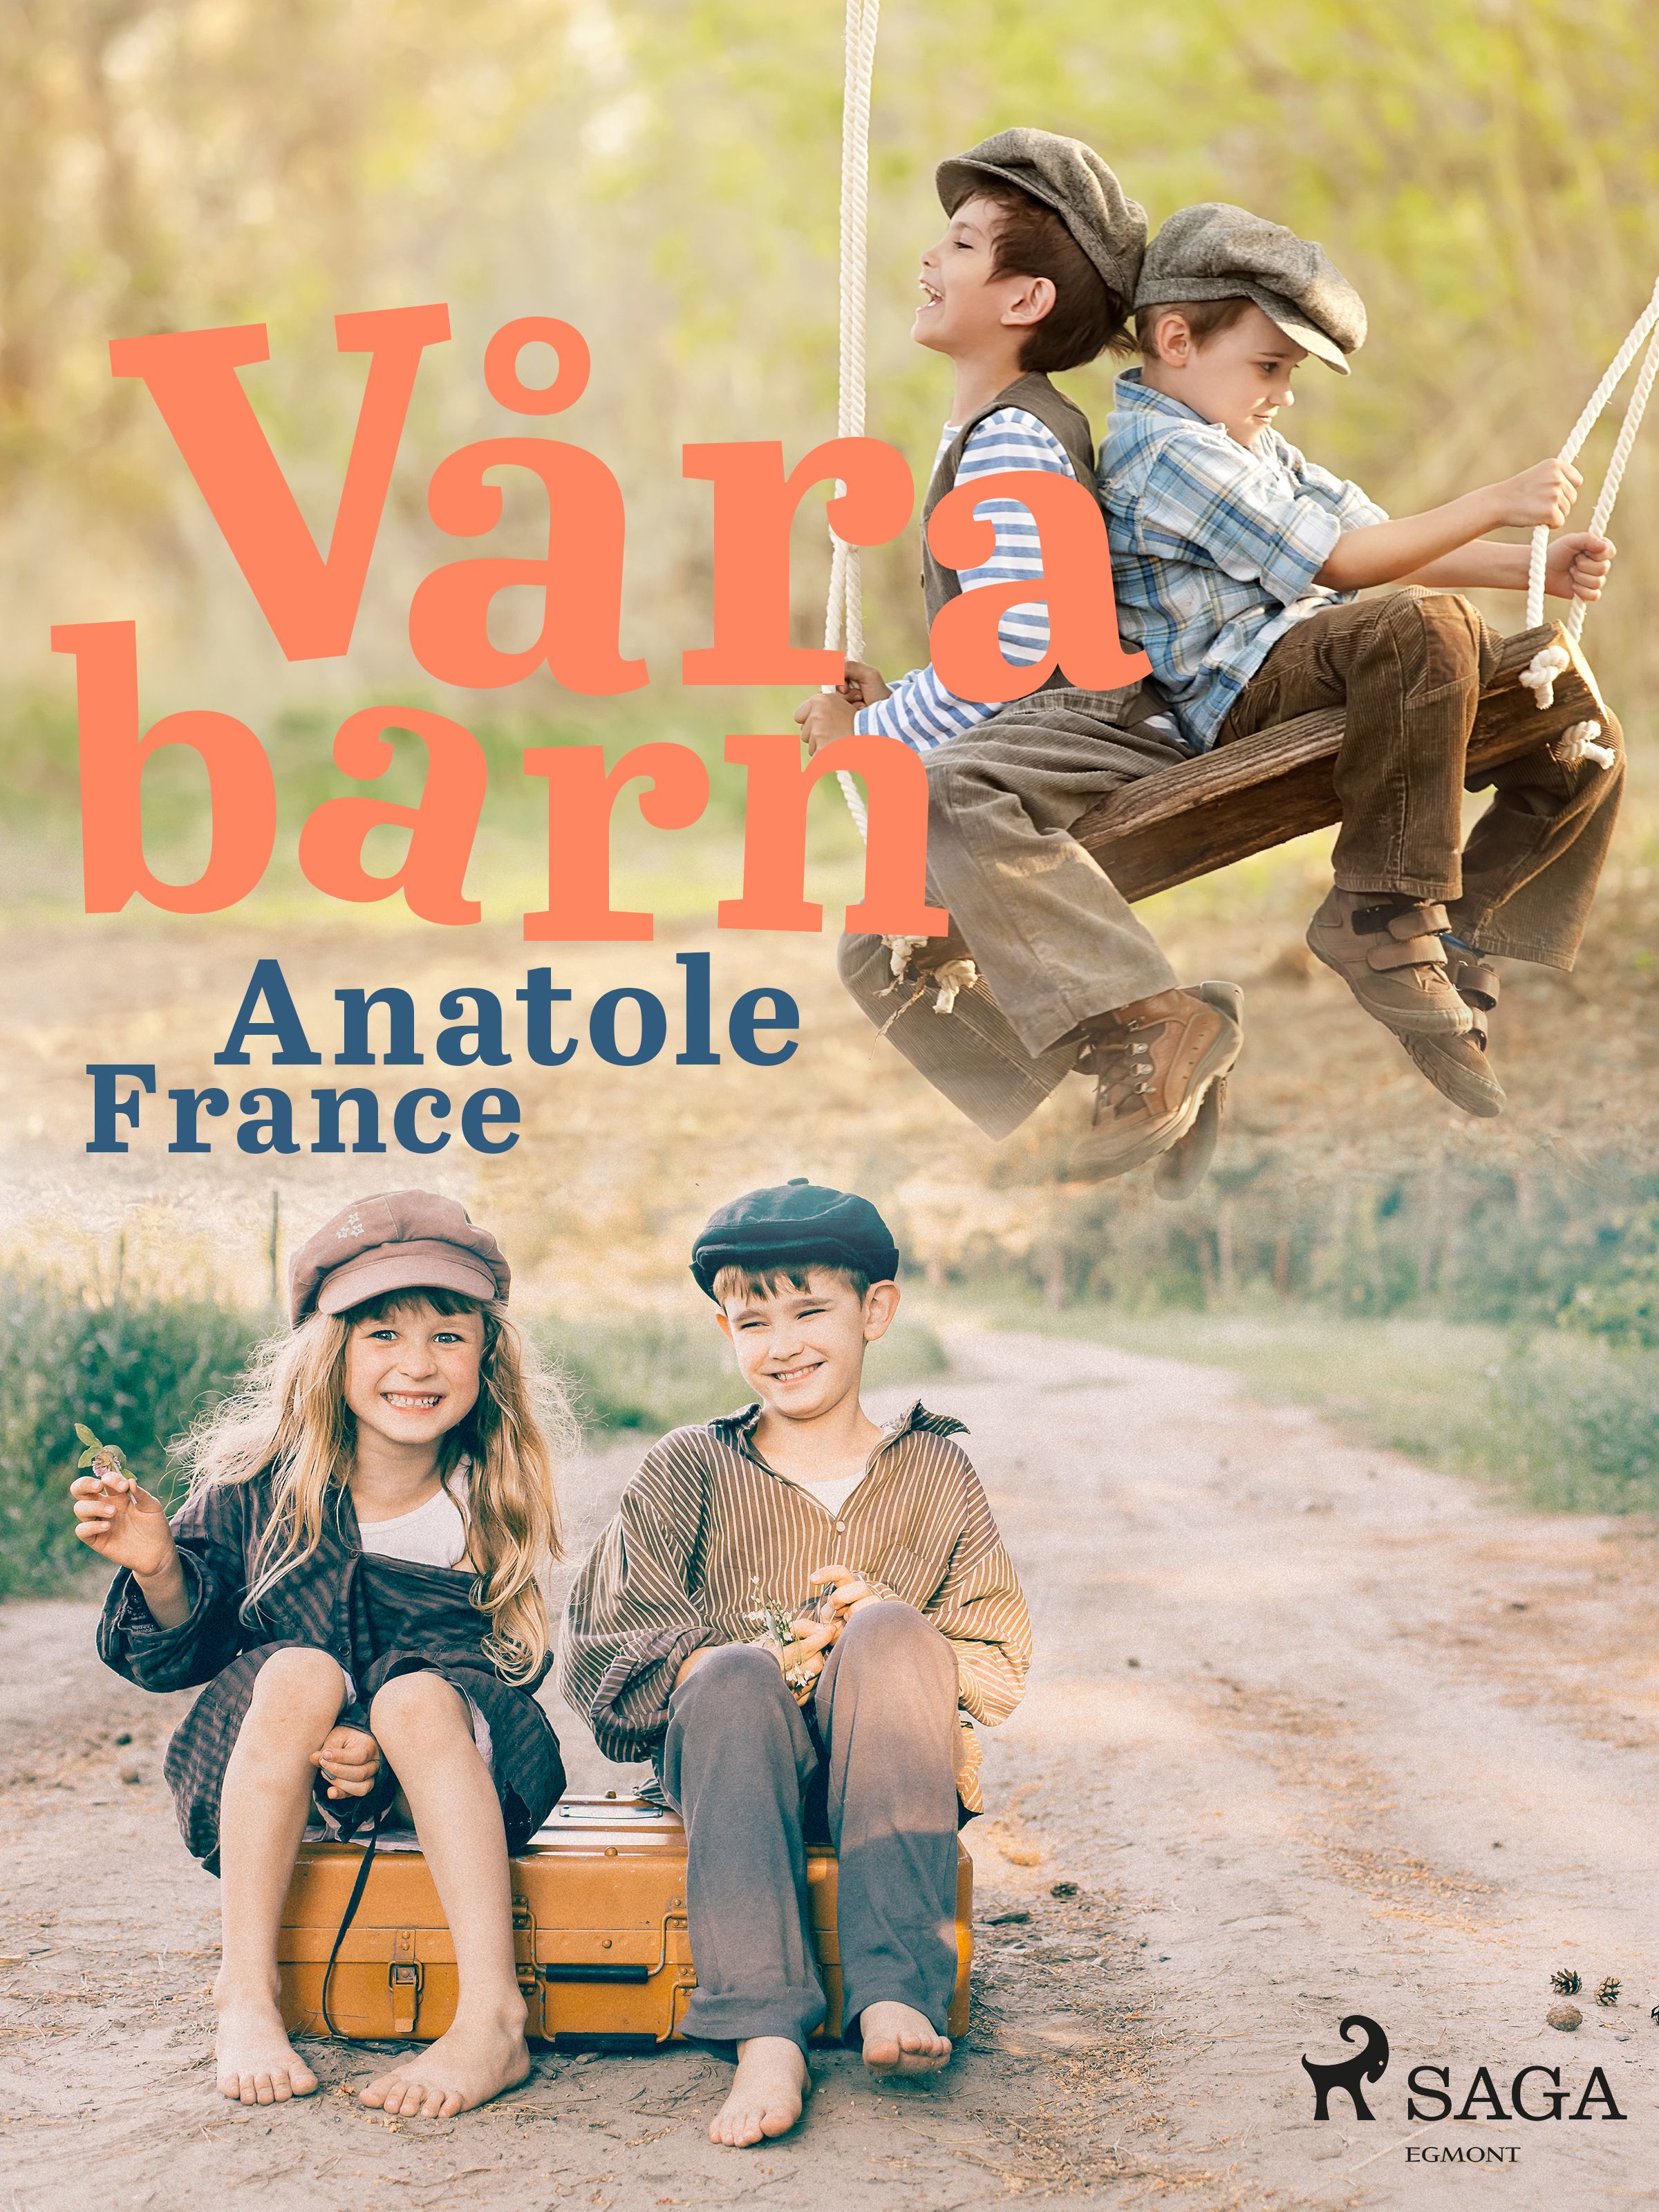 Våra barn, e-bog af Anatole France